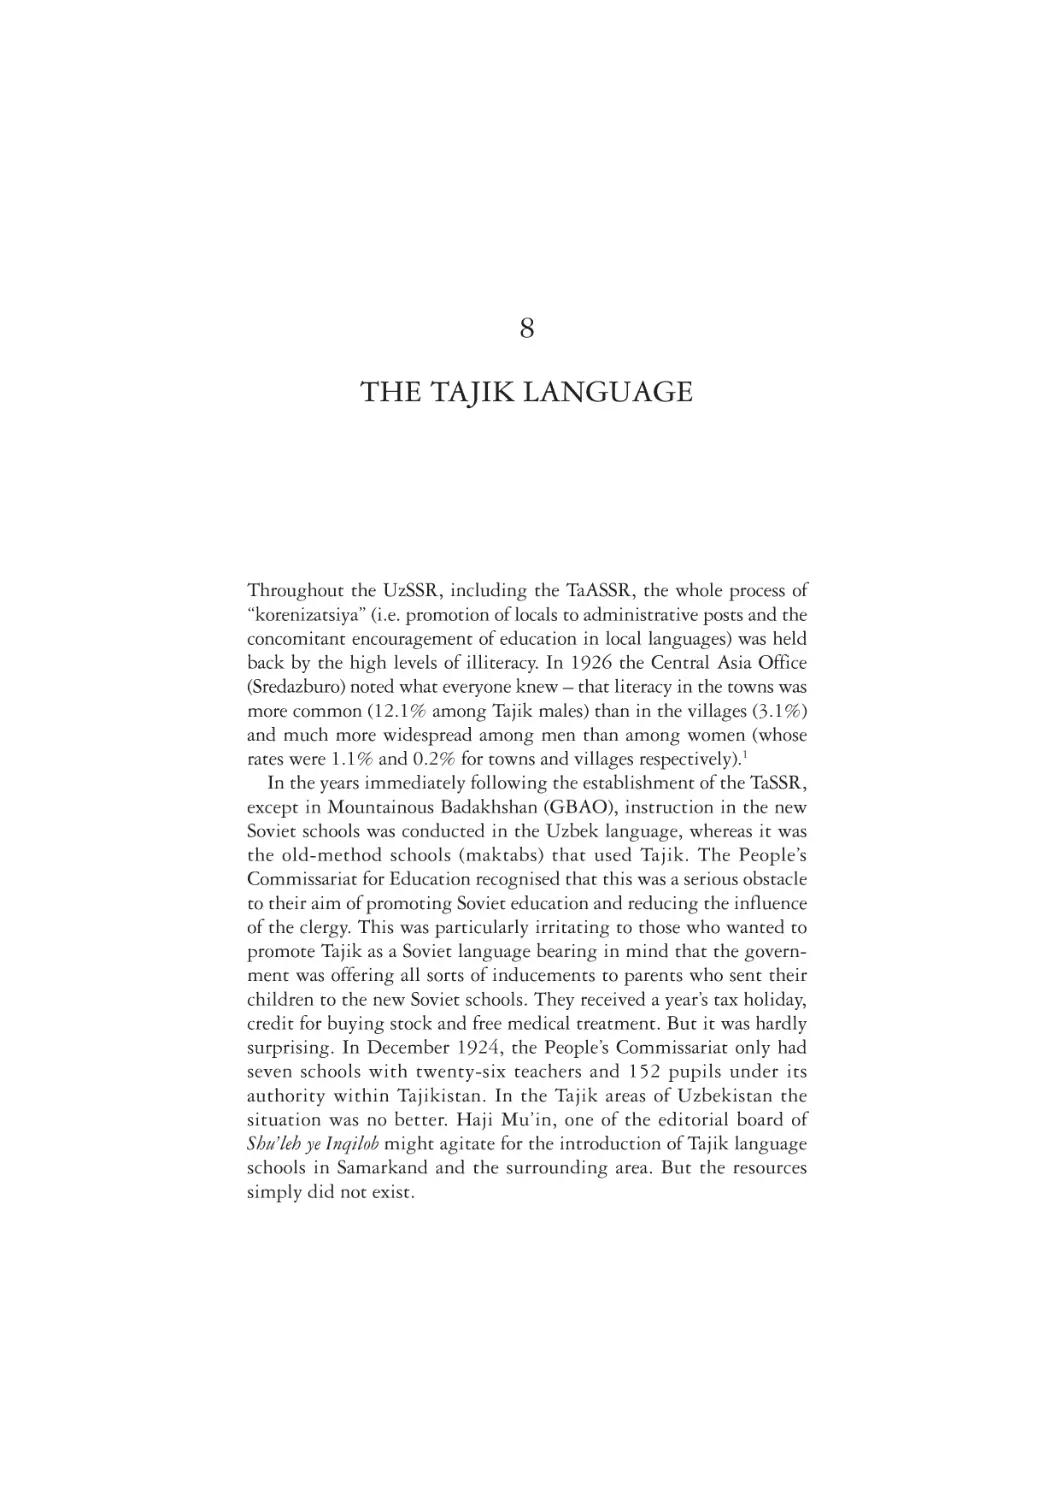 8. The Tajik Language